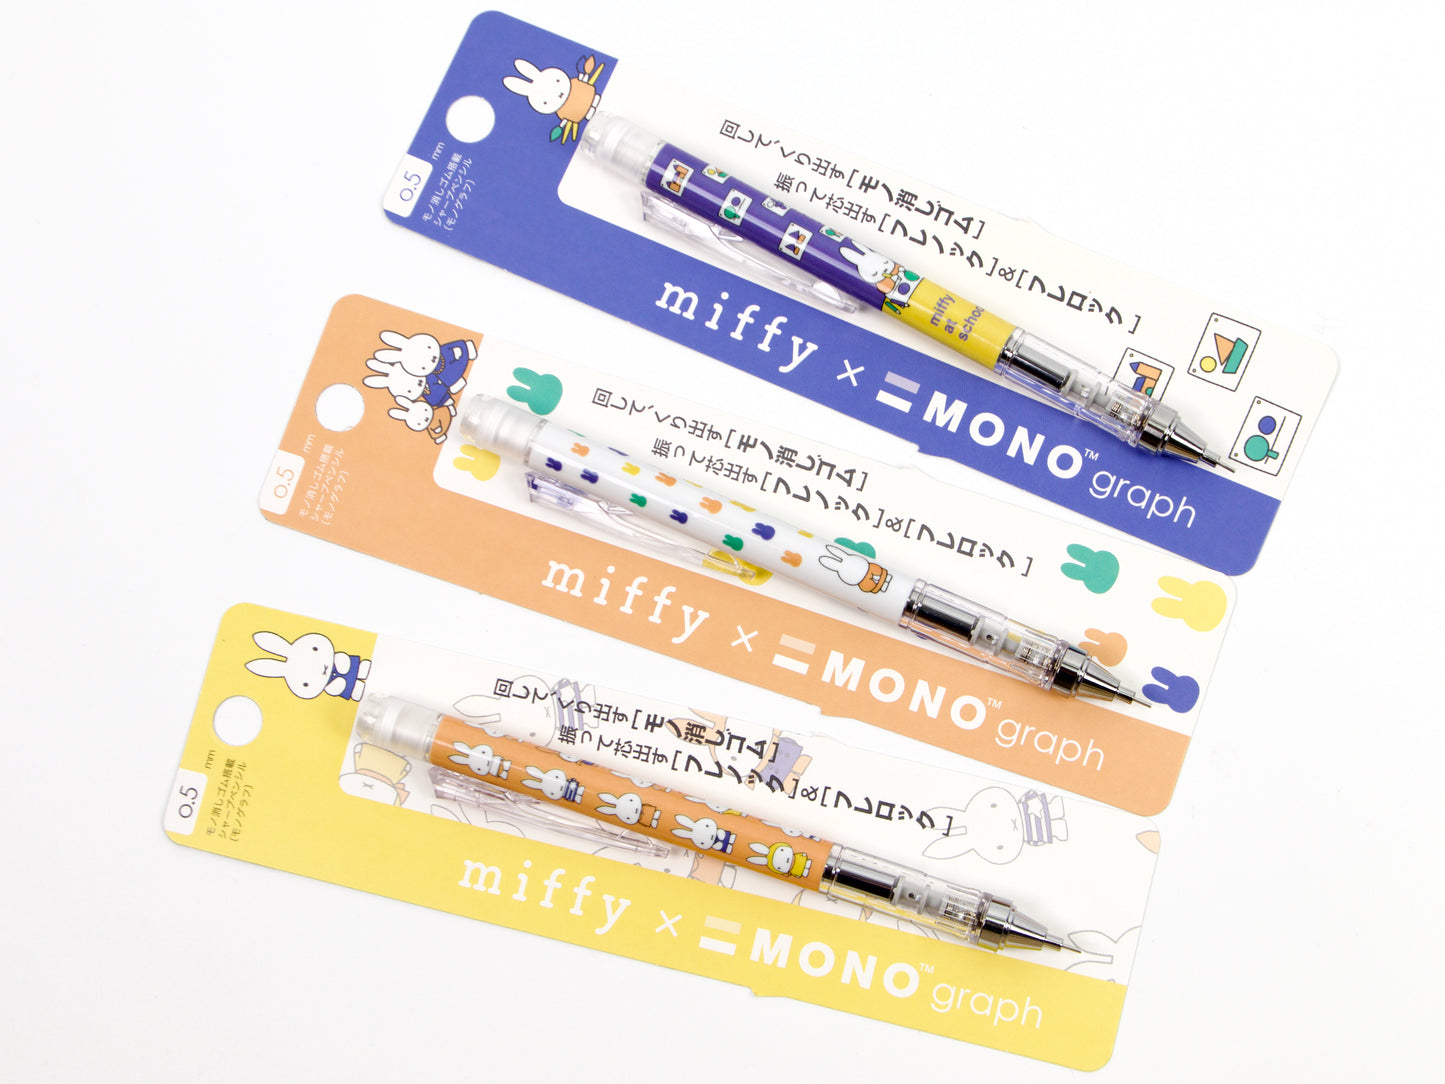 Mono Graph Miffy Limited Edition